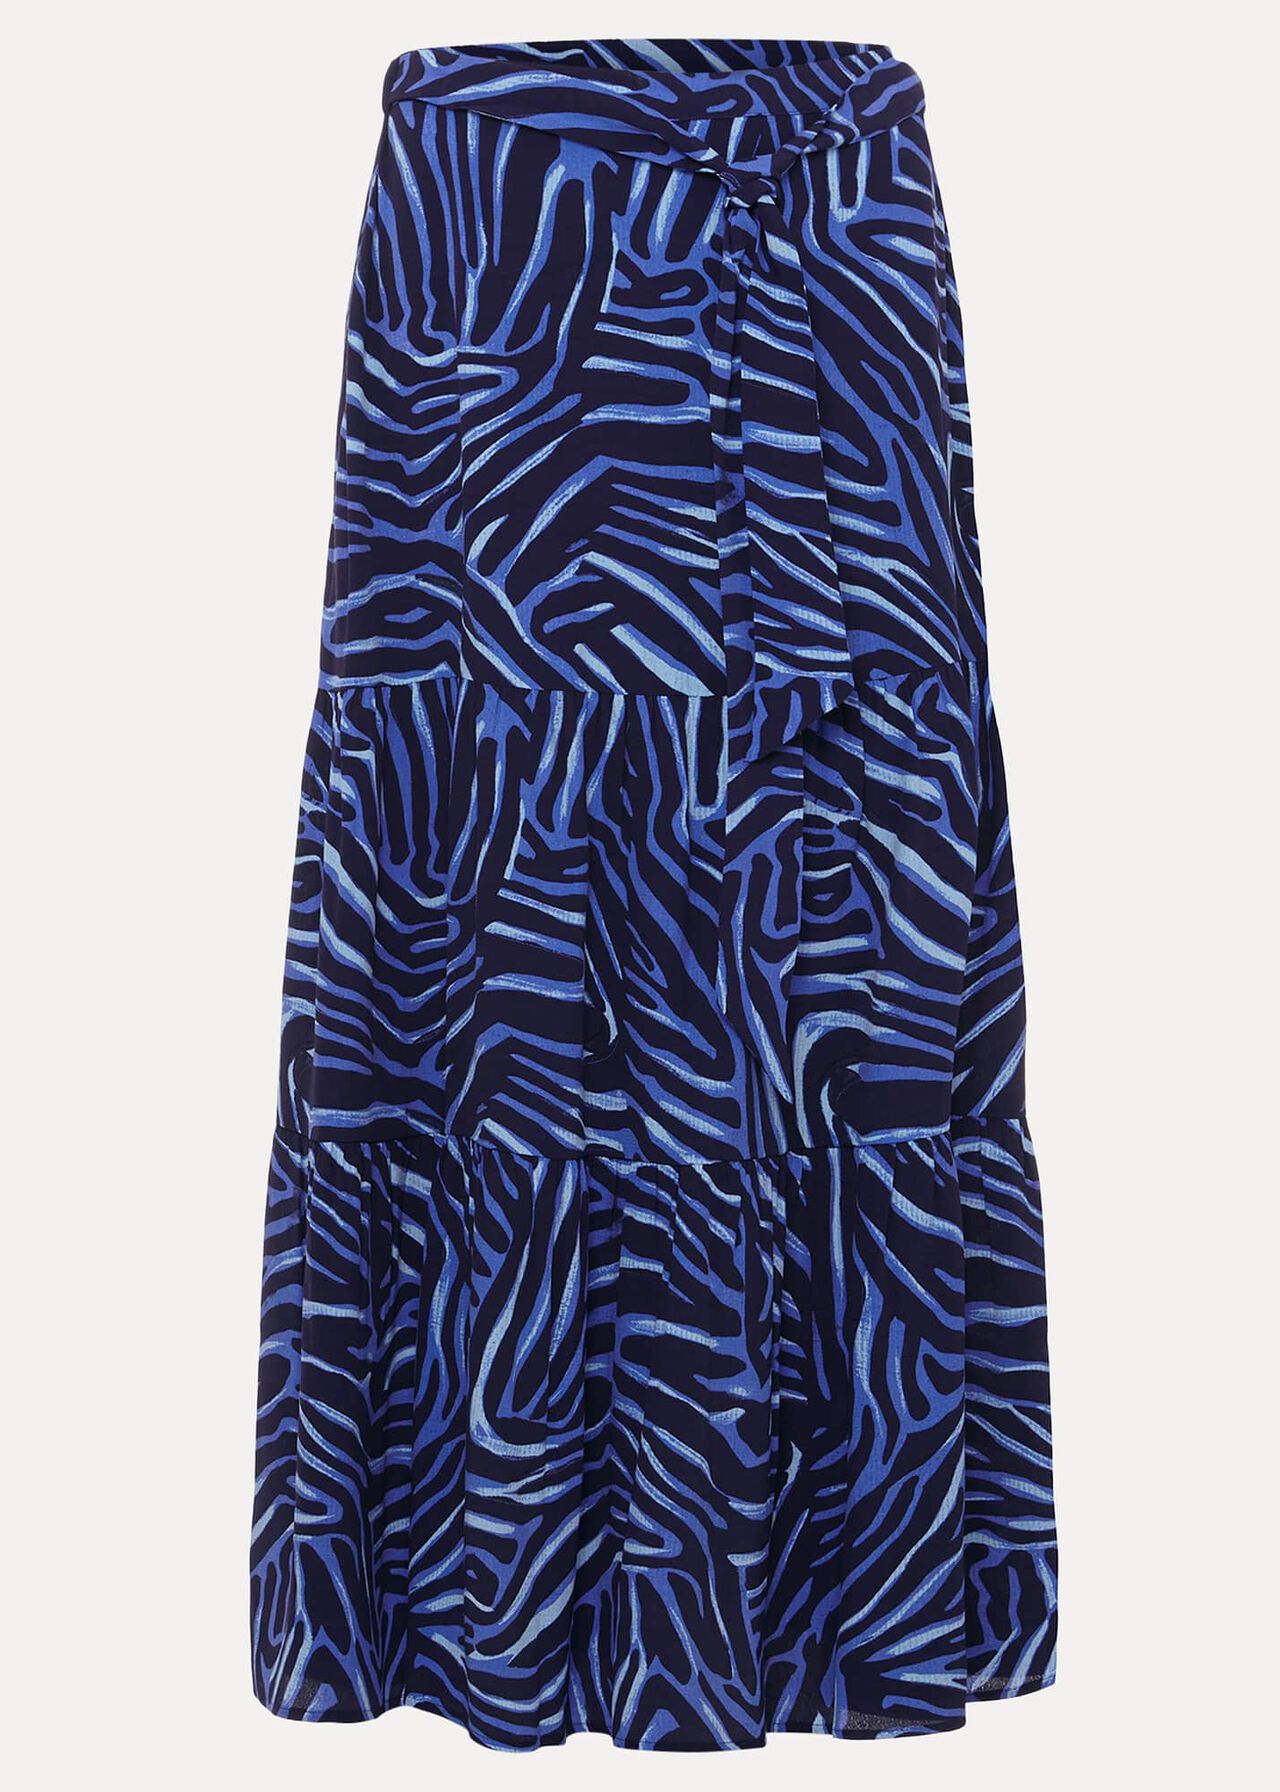 Tana Zebra Print Tiered Midi Skirt